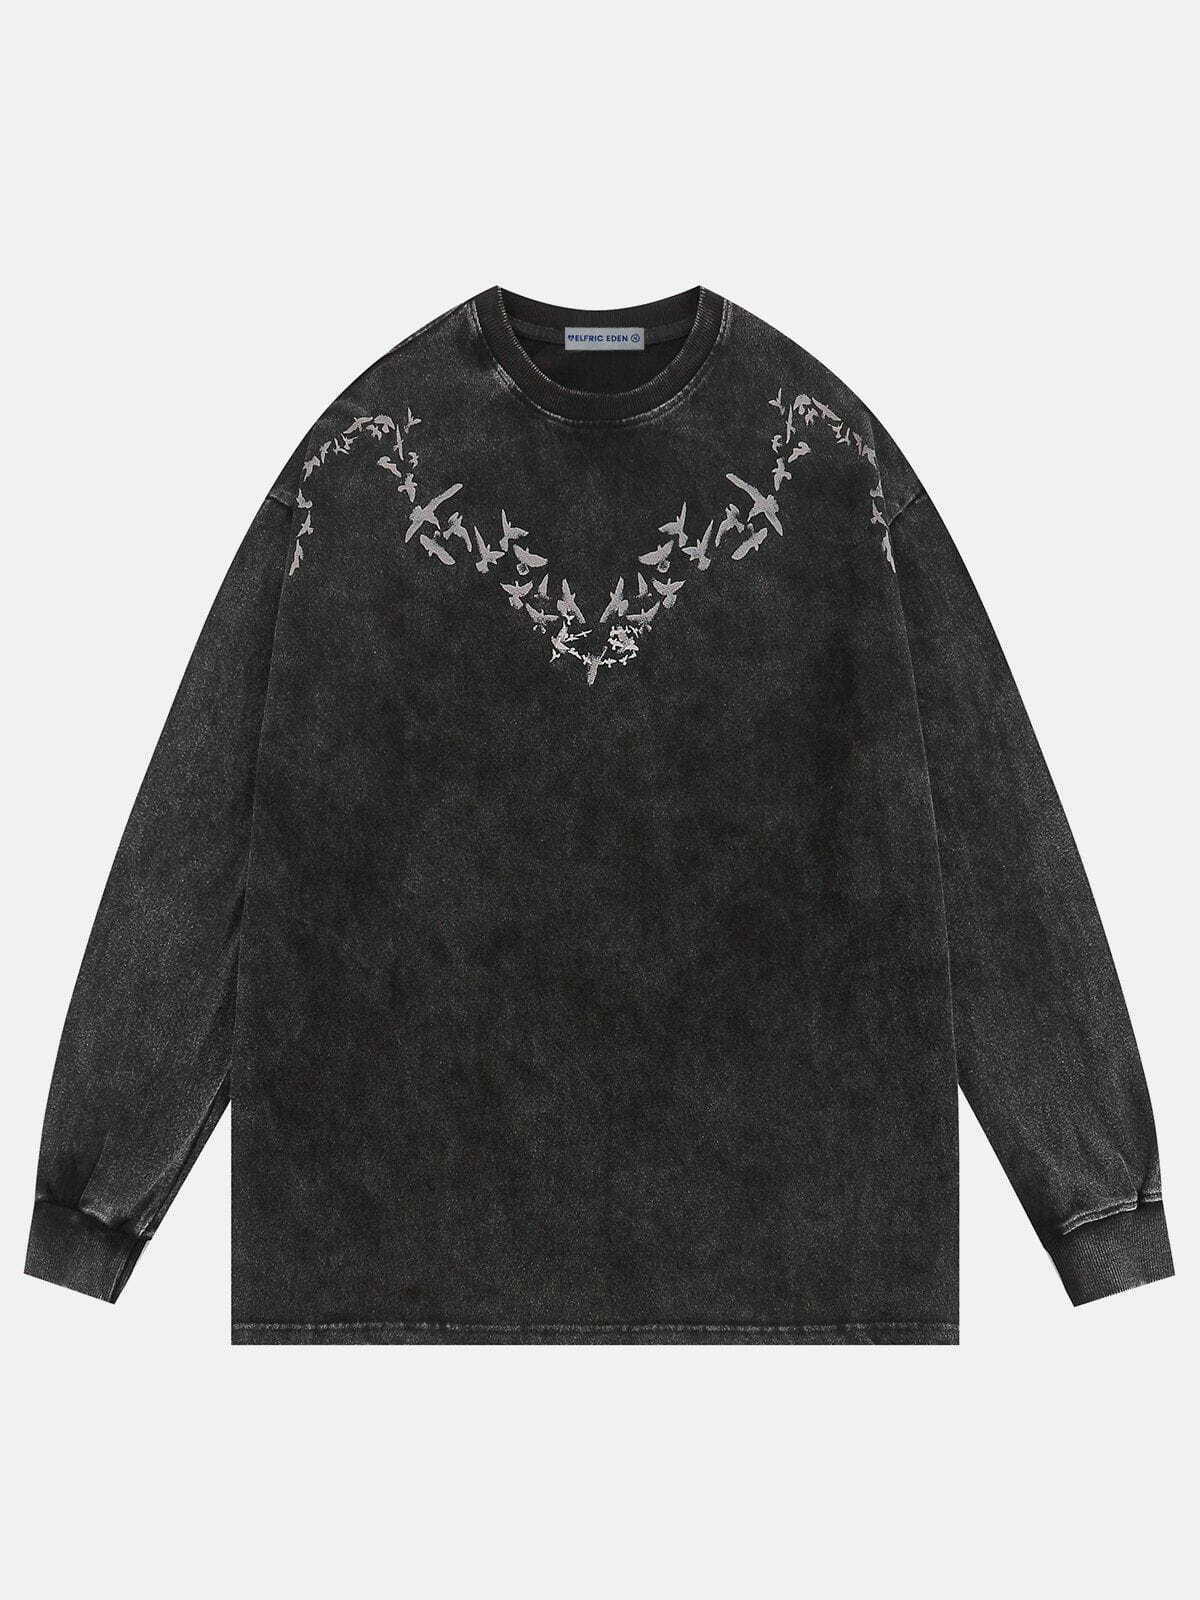 revolutionary embroidered pigeon sweatshirt urban streetwear 3916